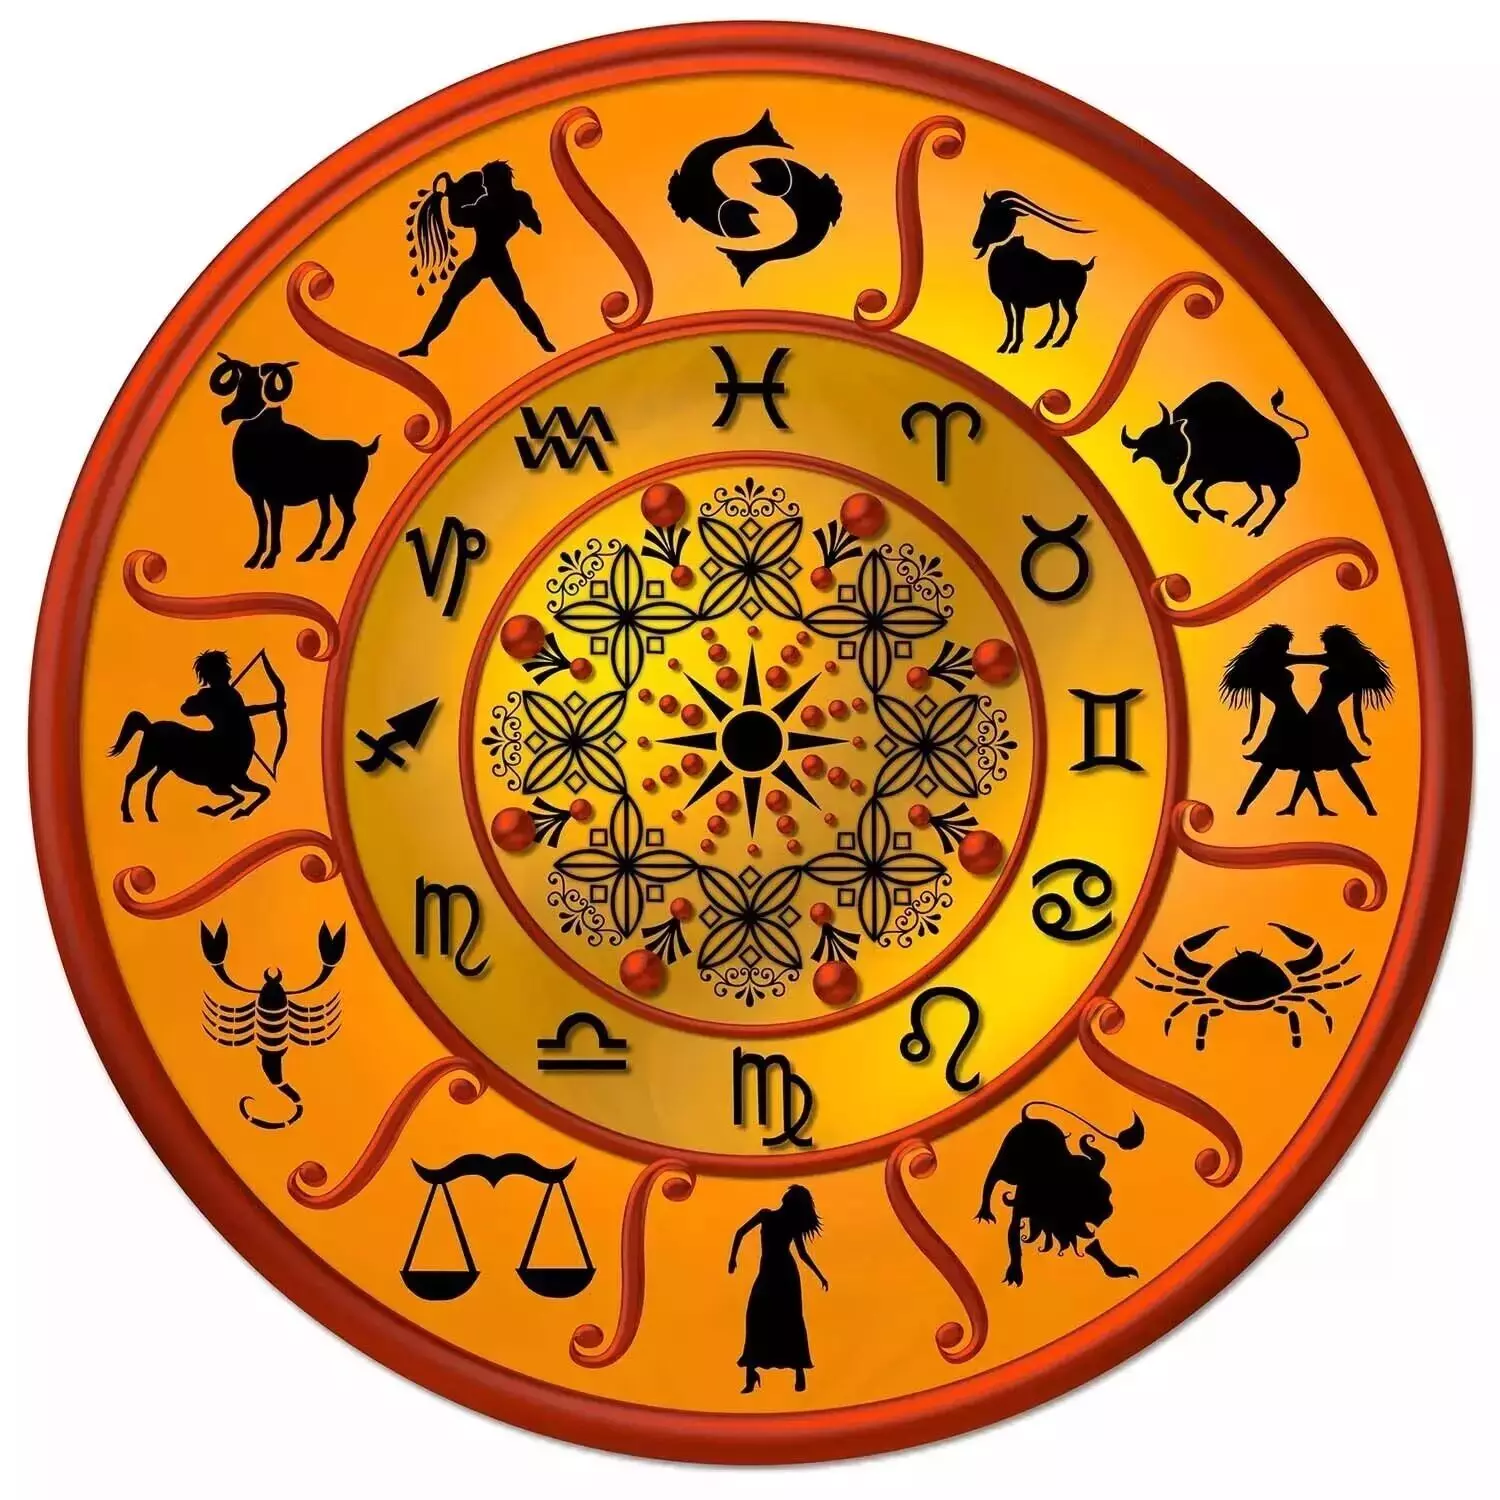 16 November – Know your todays horoscope